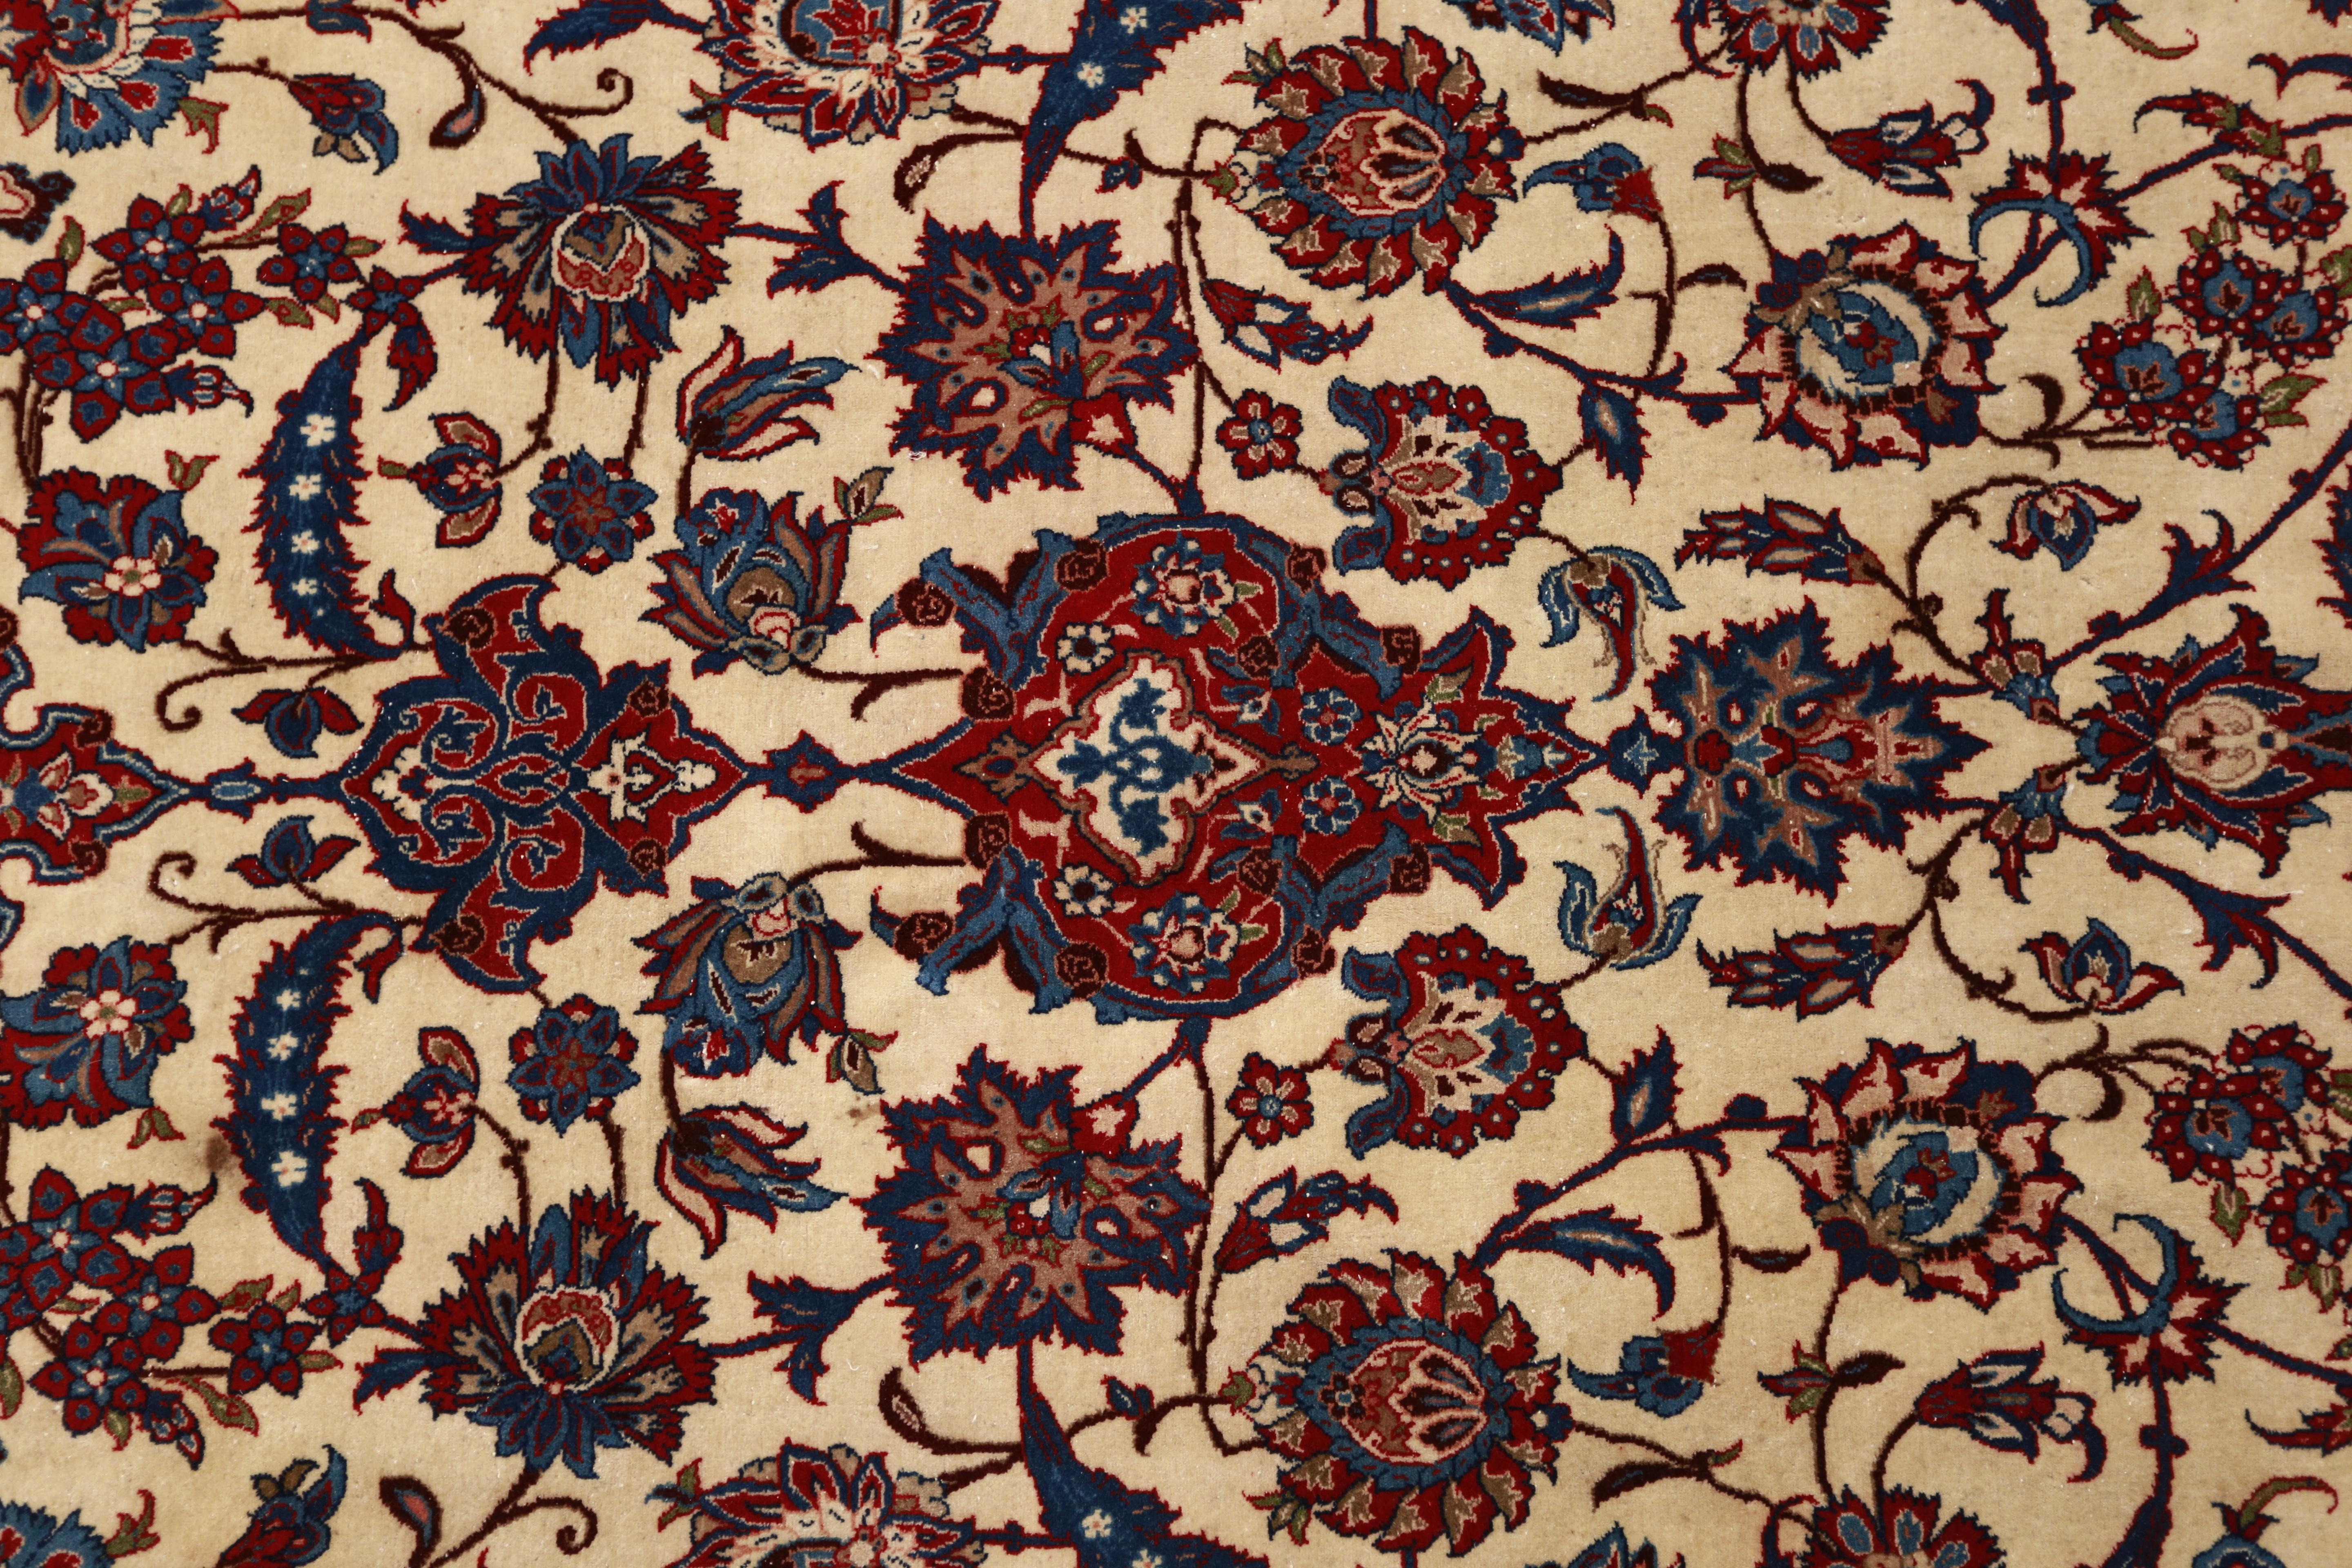 Isfahan Persian carpet 400 X 260 cm million knots per m2 For Sale 1